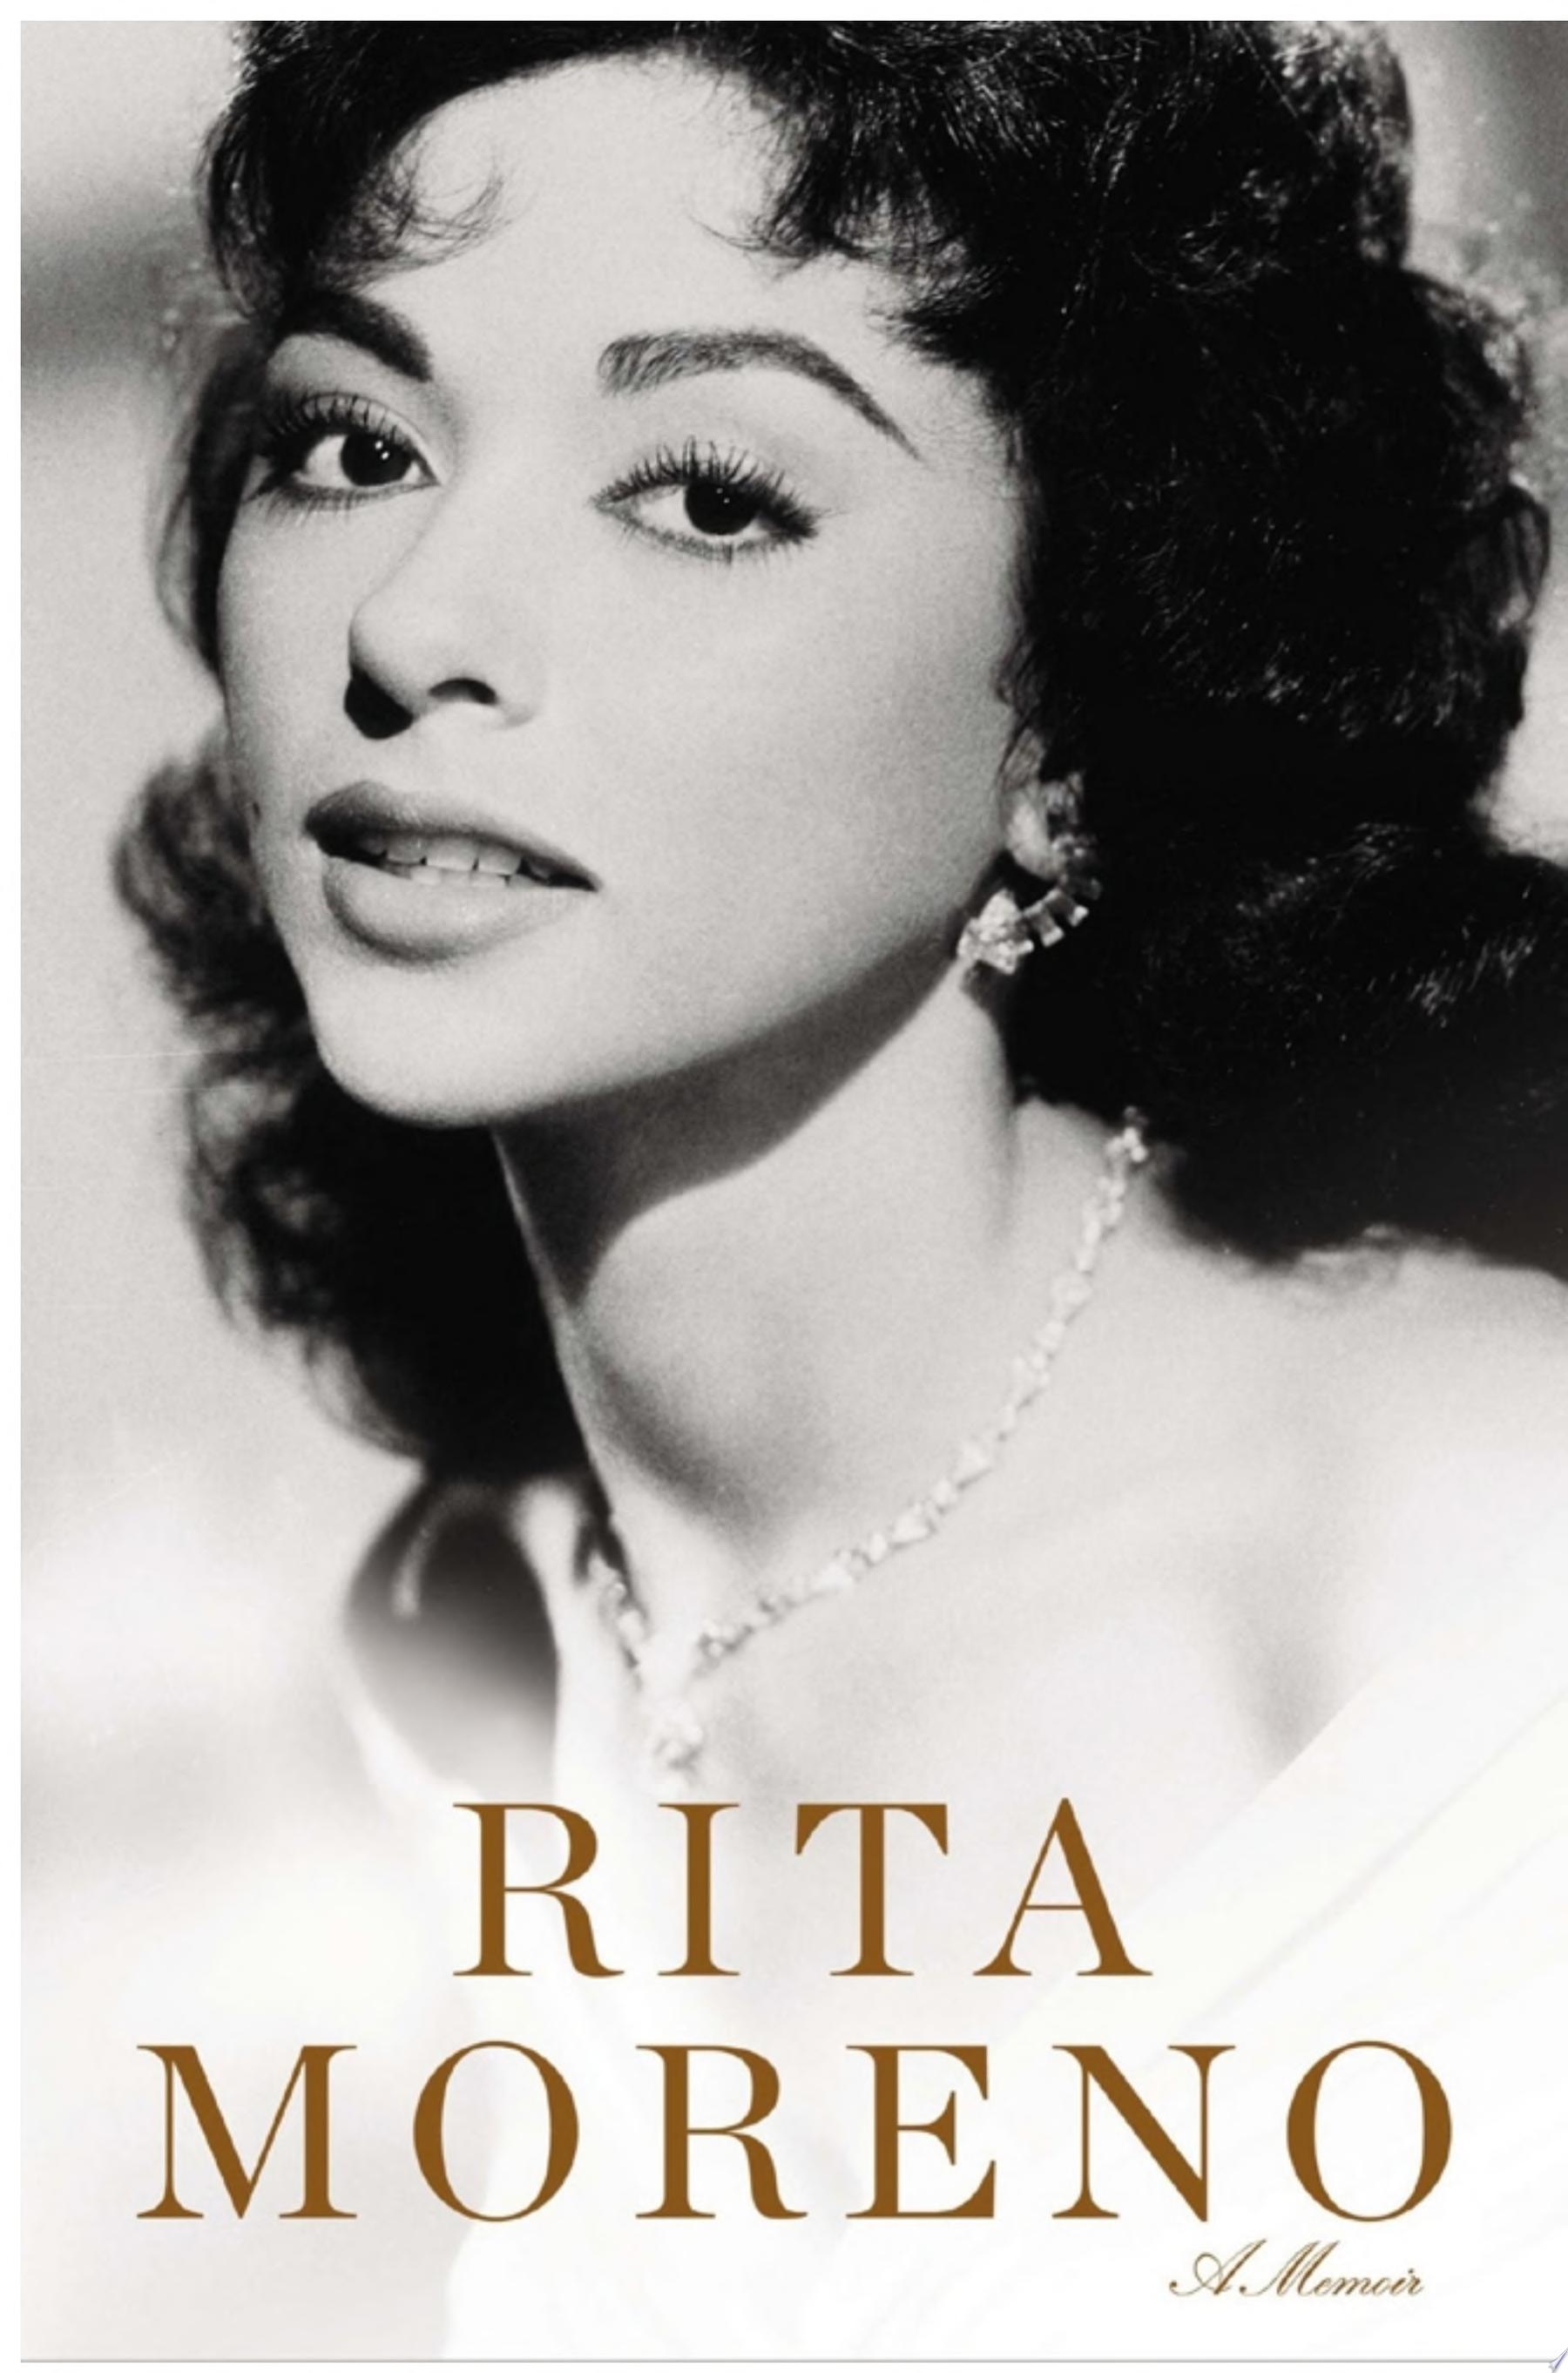 Image for "Rita Moreno"